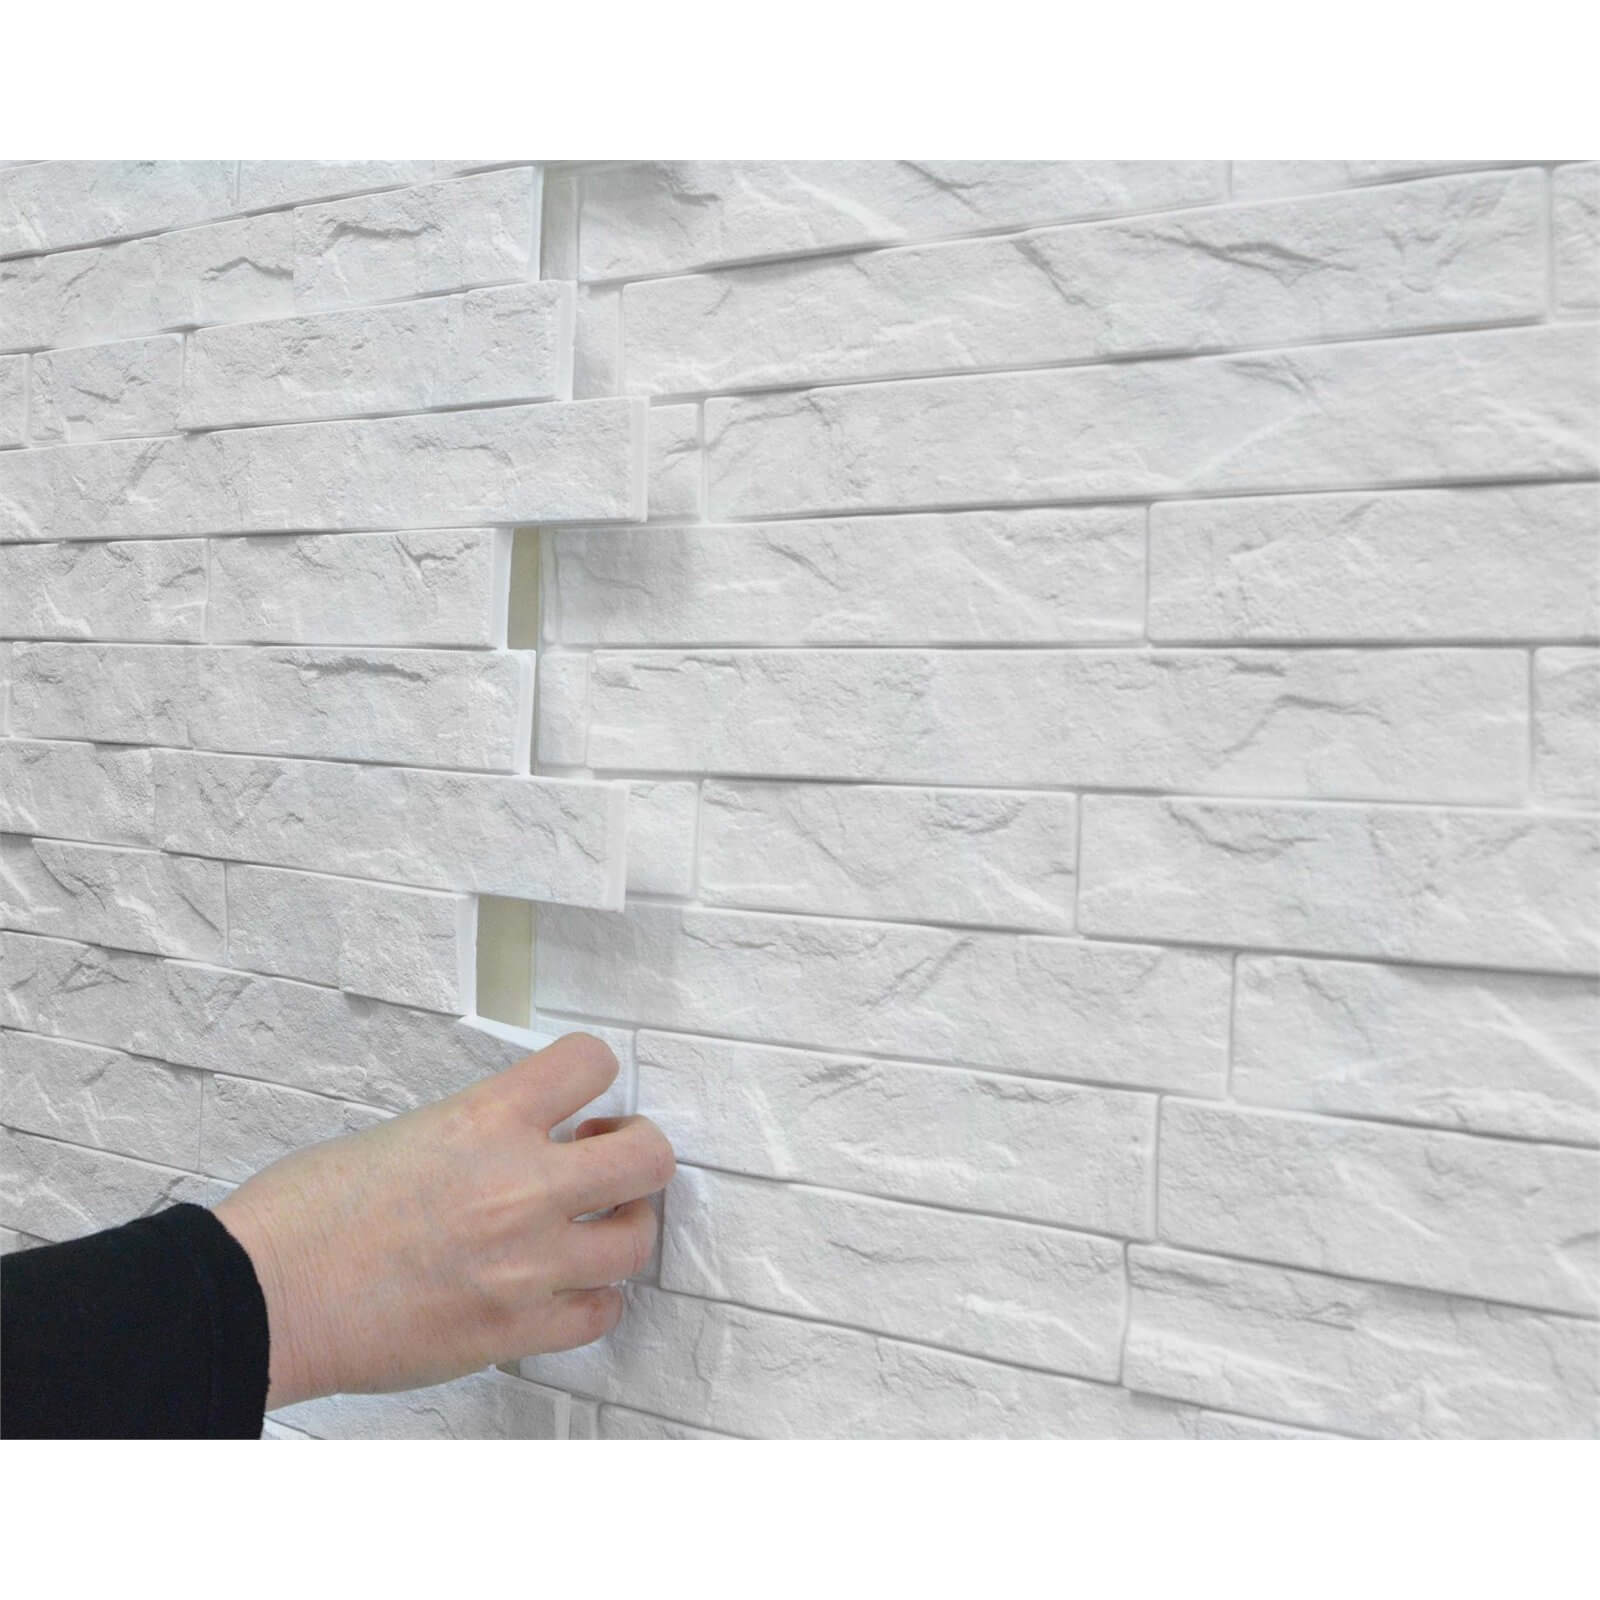 Innovera Decor PVC Seamless 3D Design Cladding Panel (Ledge Stone - White, Set of 6)